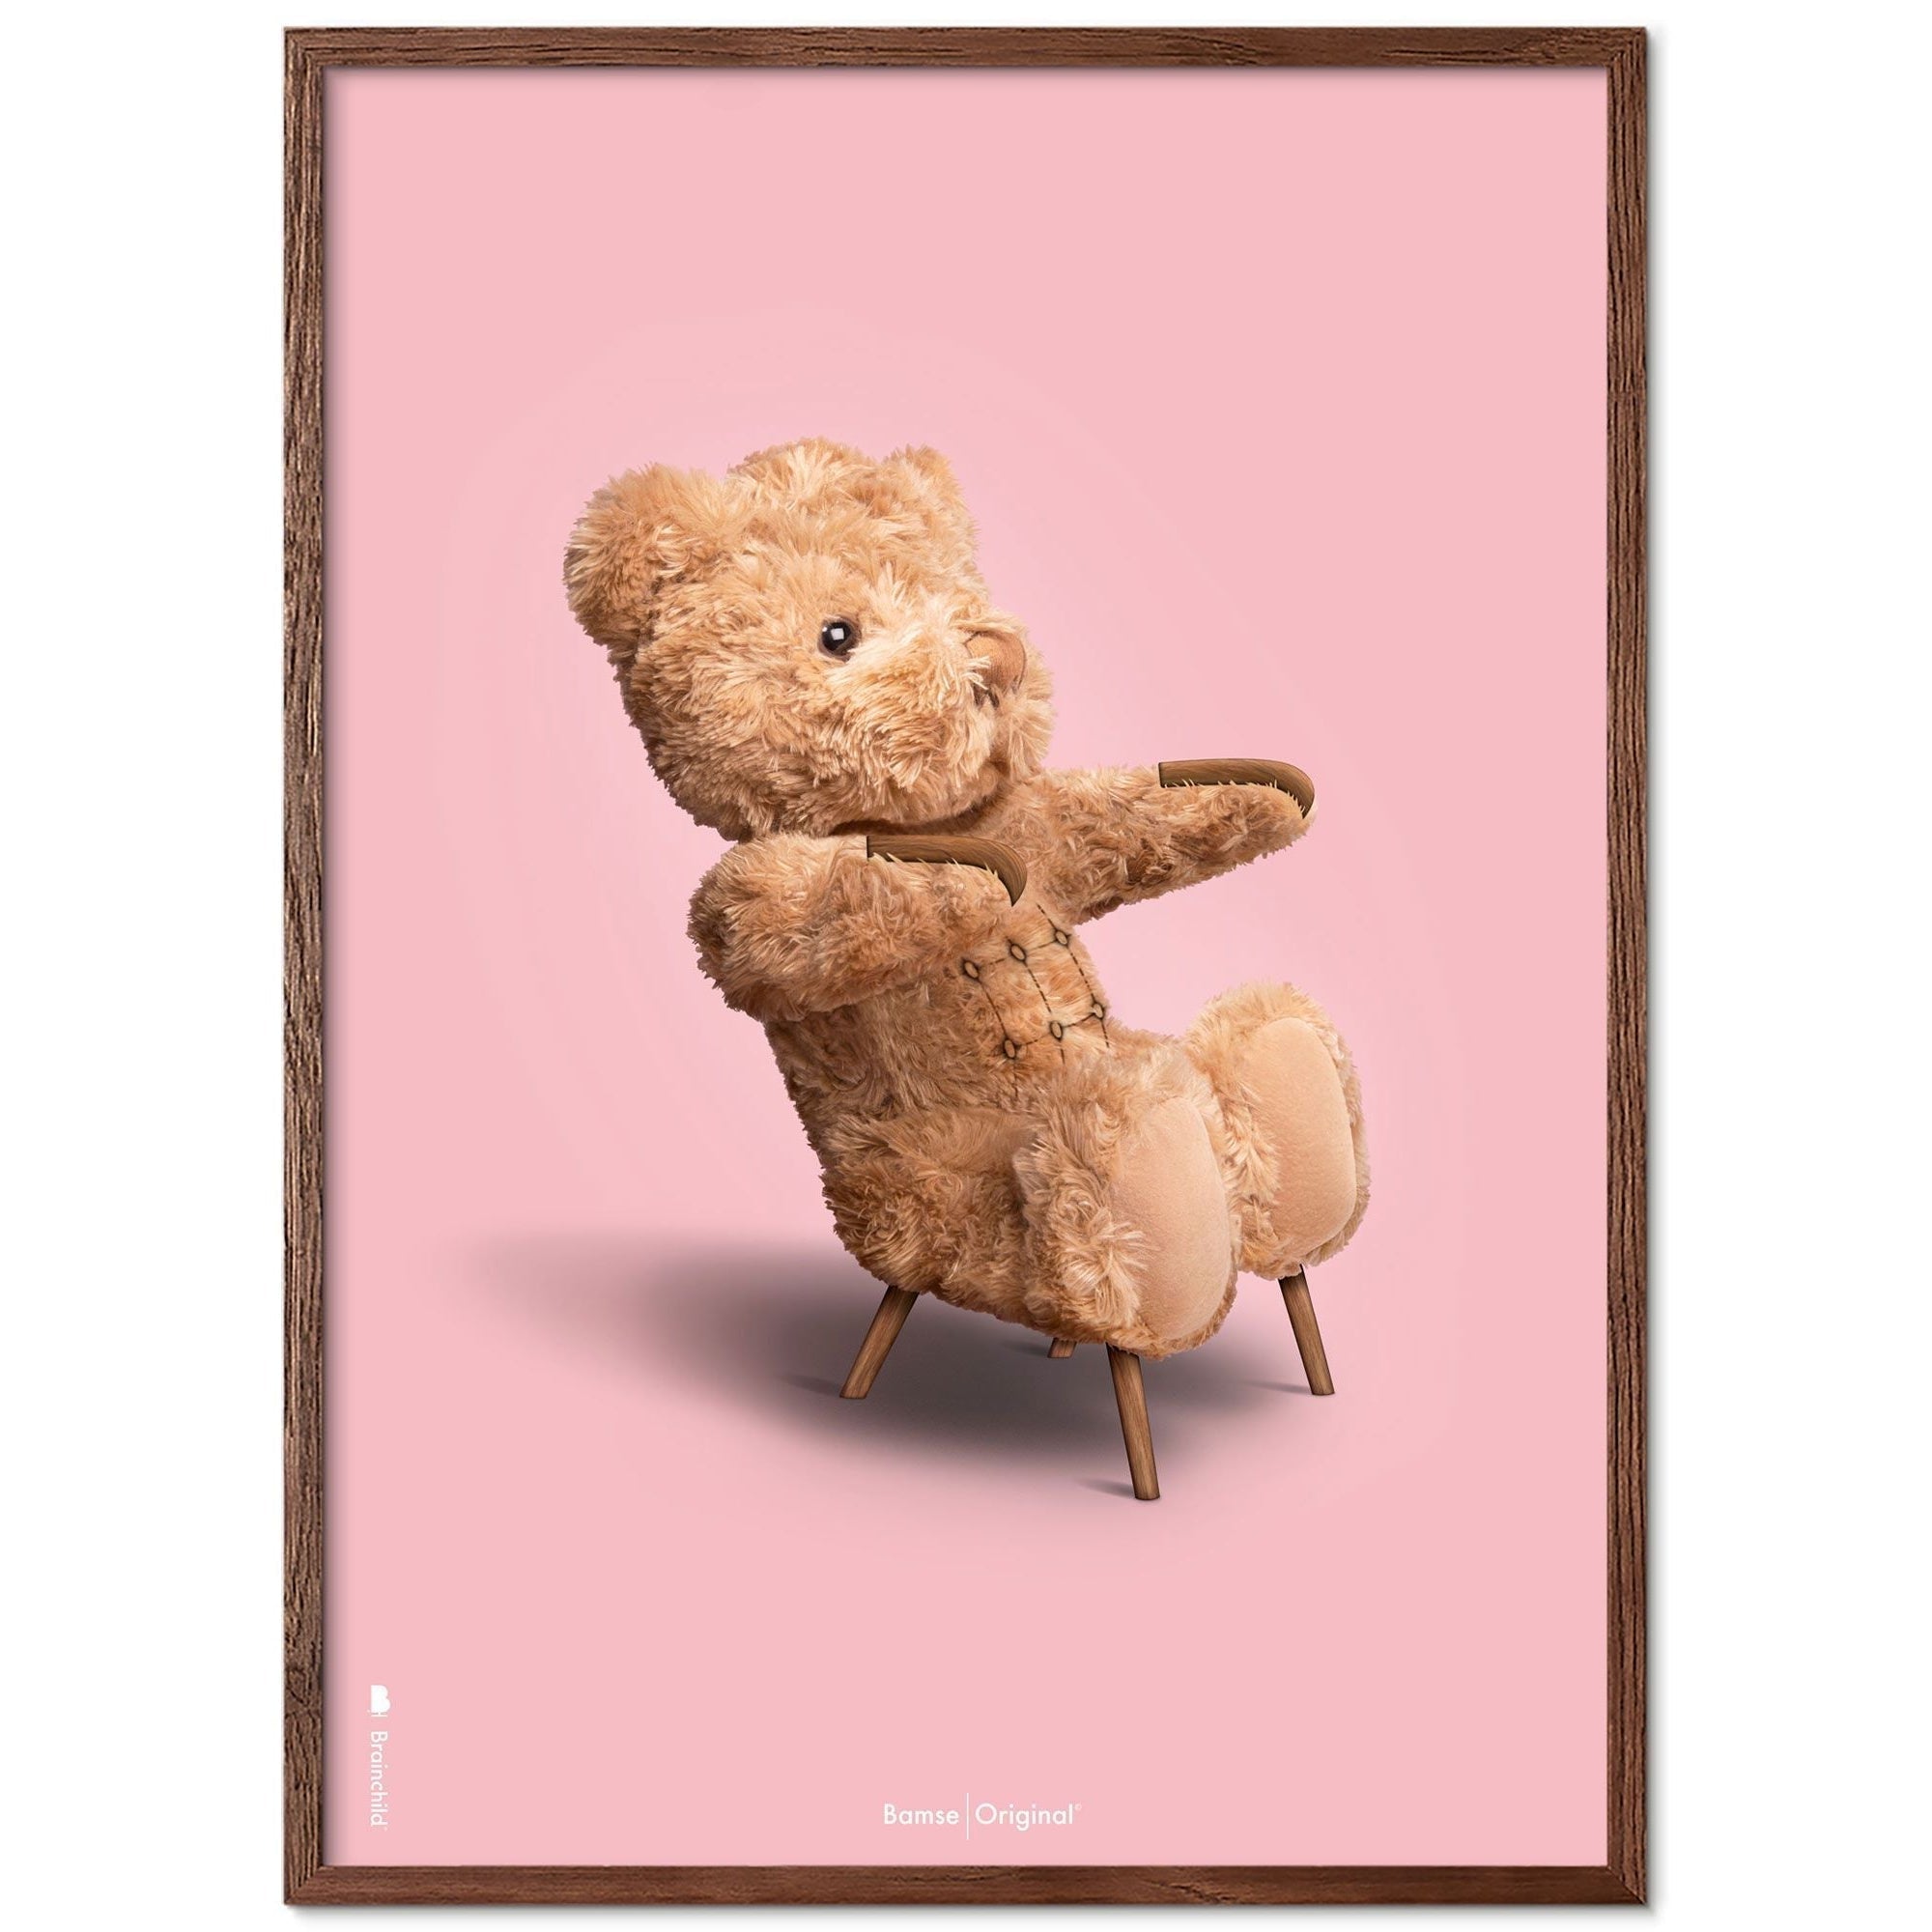 Brainchild Teddybeer klassiek poster frame gemaakt van donker hout ram 50x70 cm, roze achtergrond